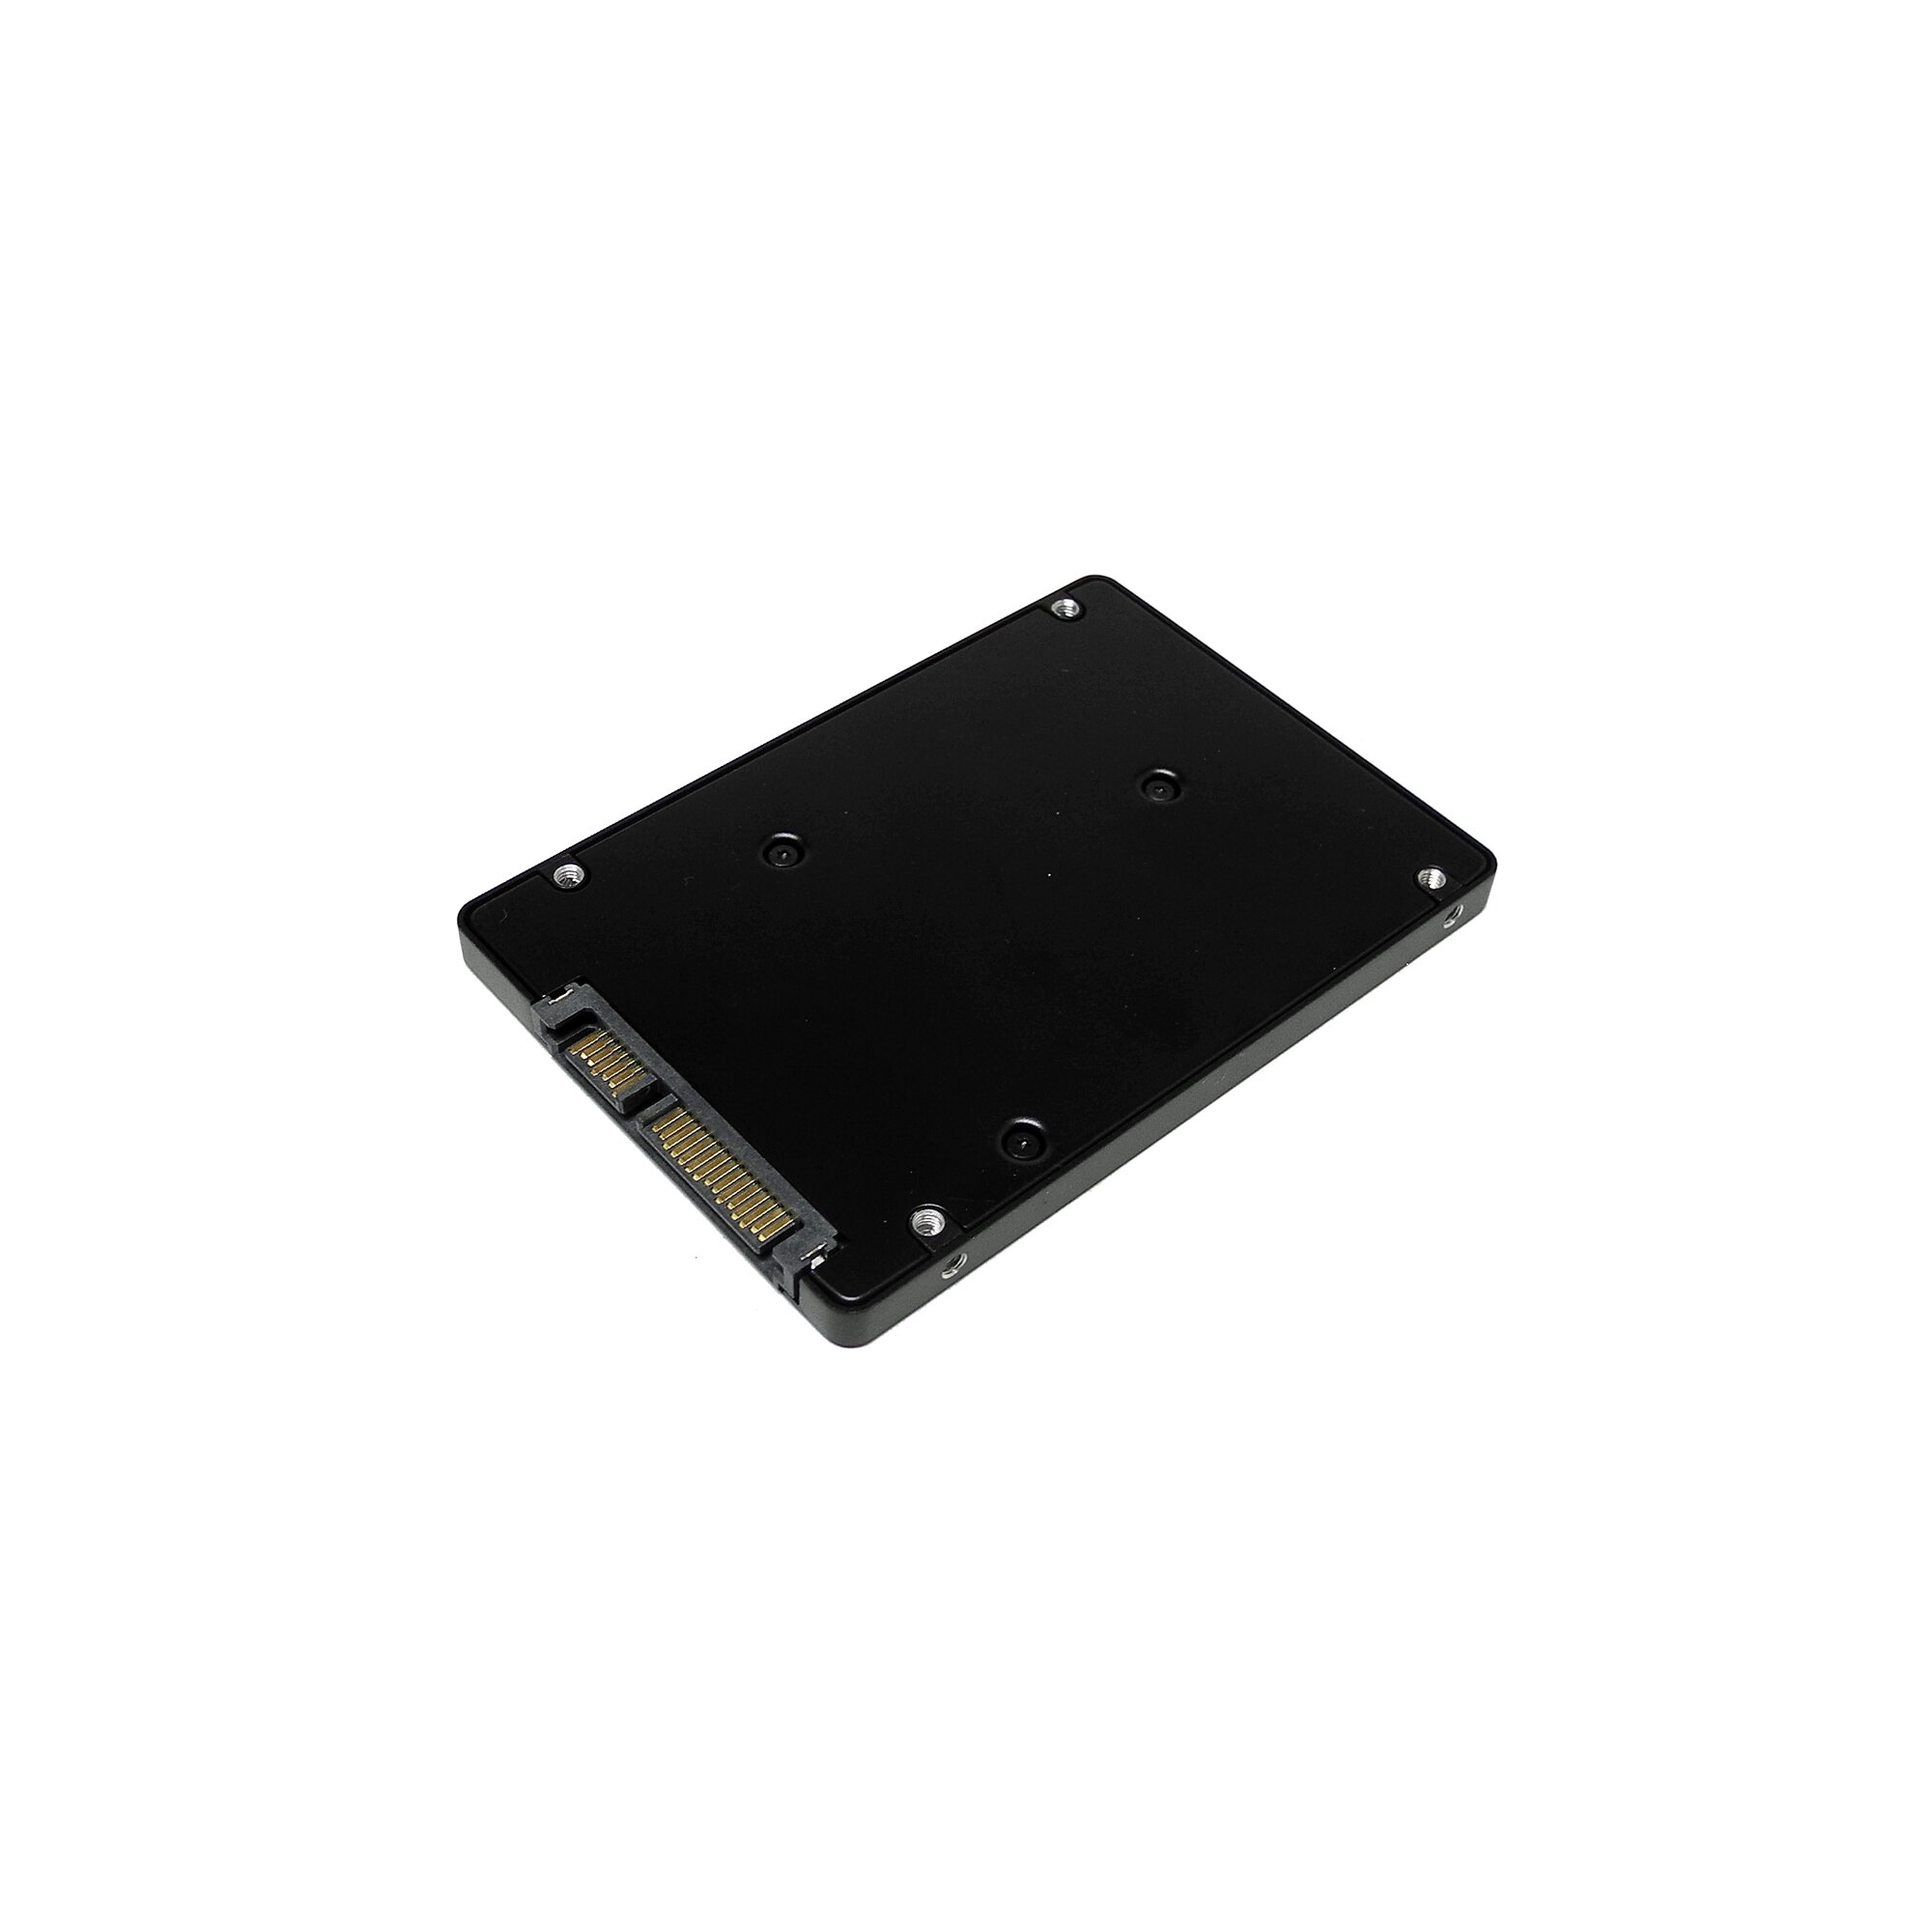 Samsung 850 EVO 500GB 2.5-Inch SATA III Internal SSD - MZ-75E500B